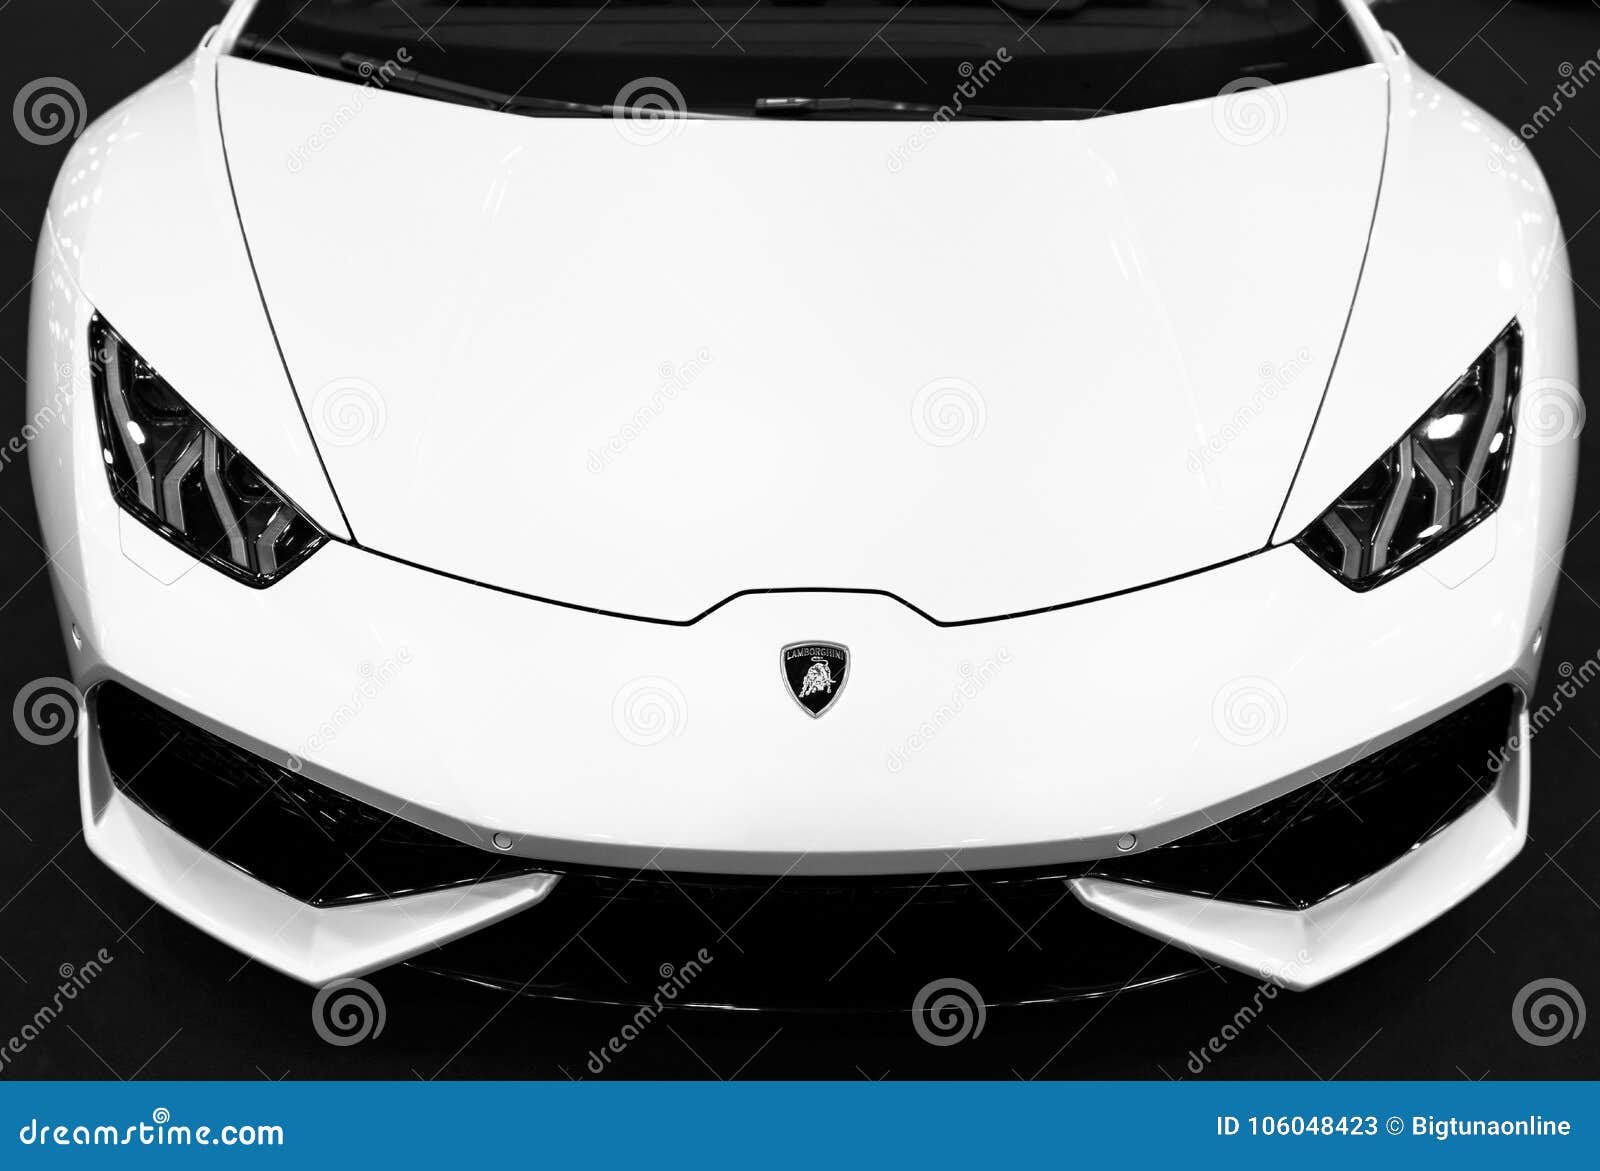 Front View of a White Luxury Sport Car Lamborghini Huracan LP 610-4. Car  Exterior Details Editorial Stock Photo - Image of dealer, illustrative:  106048423